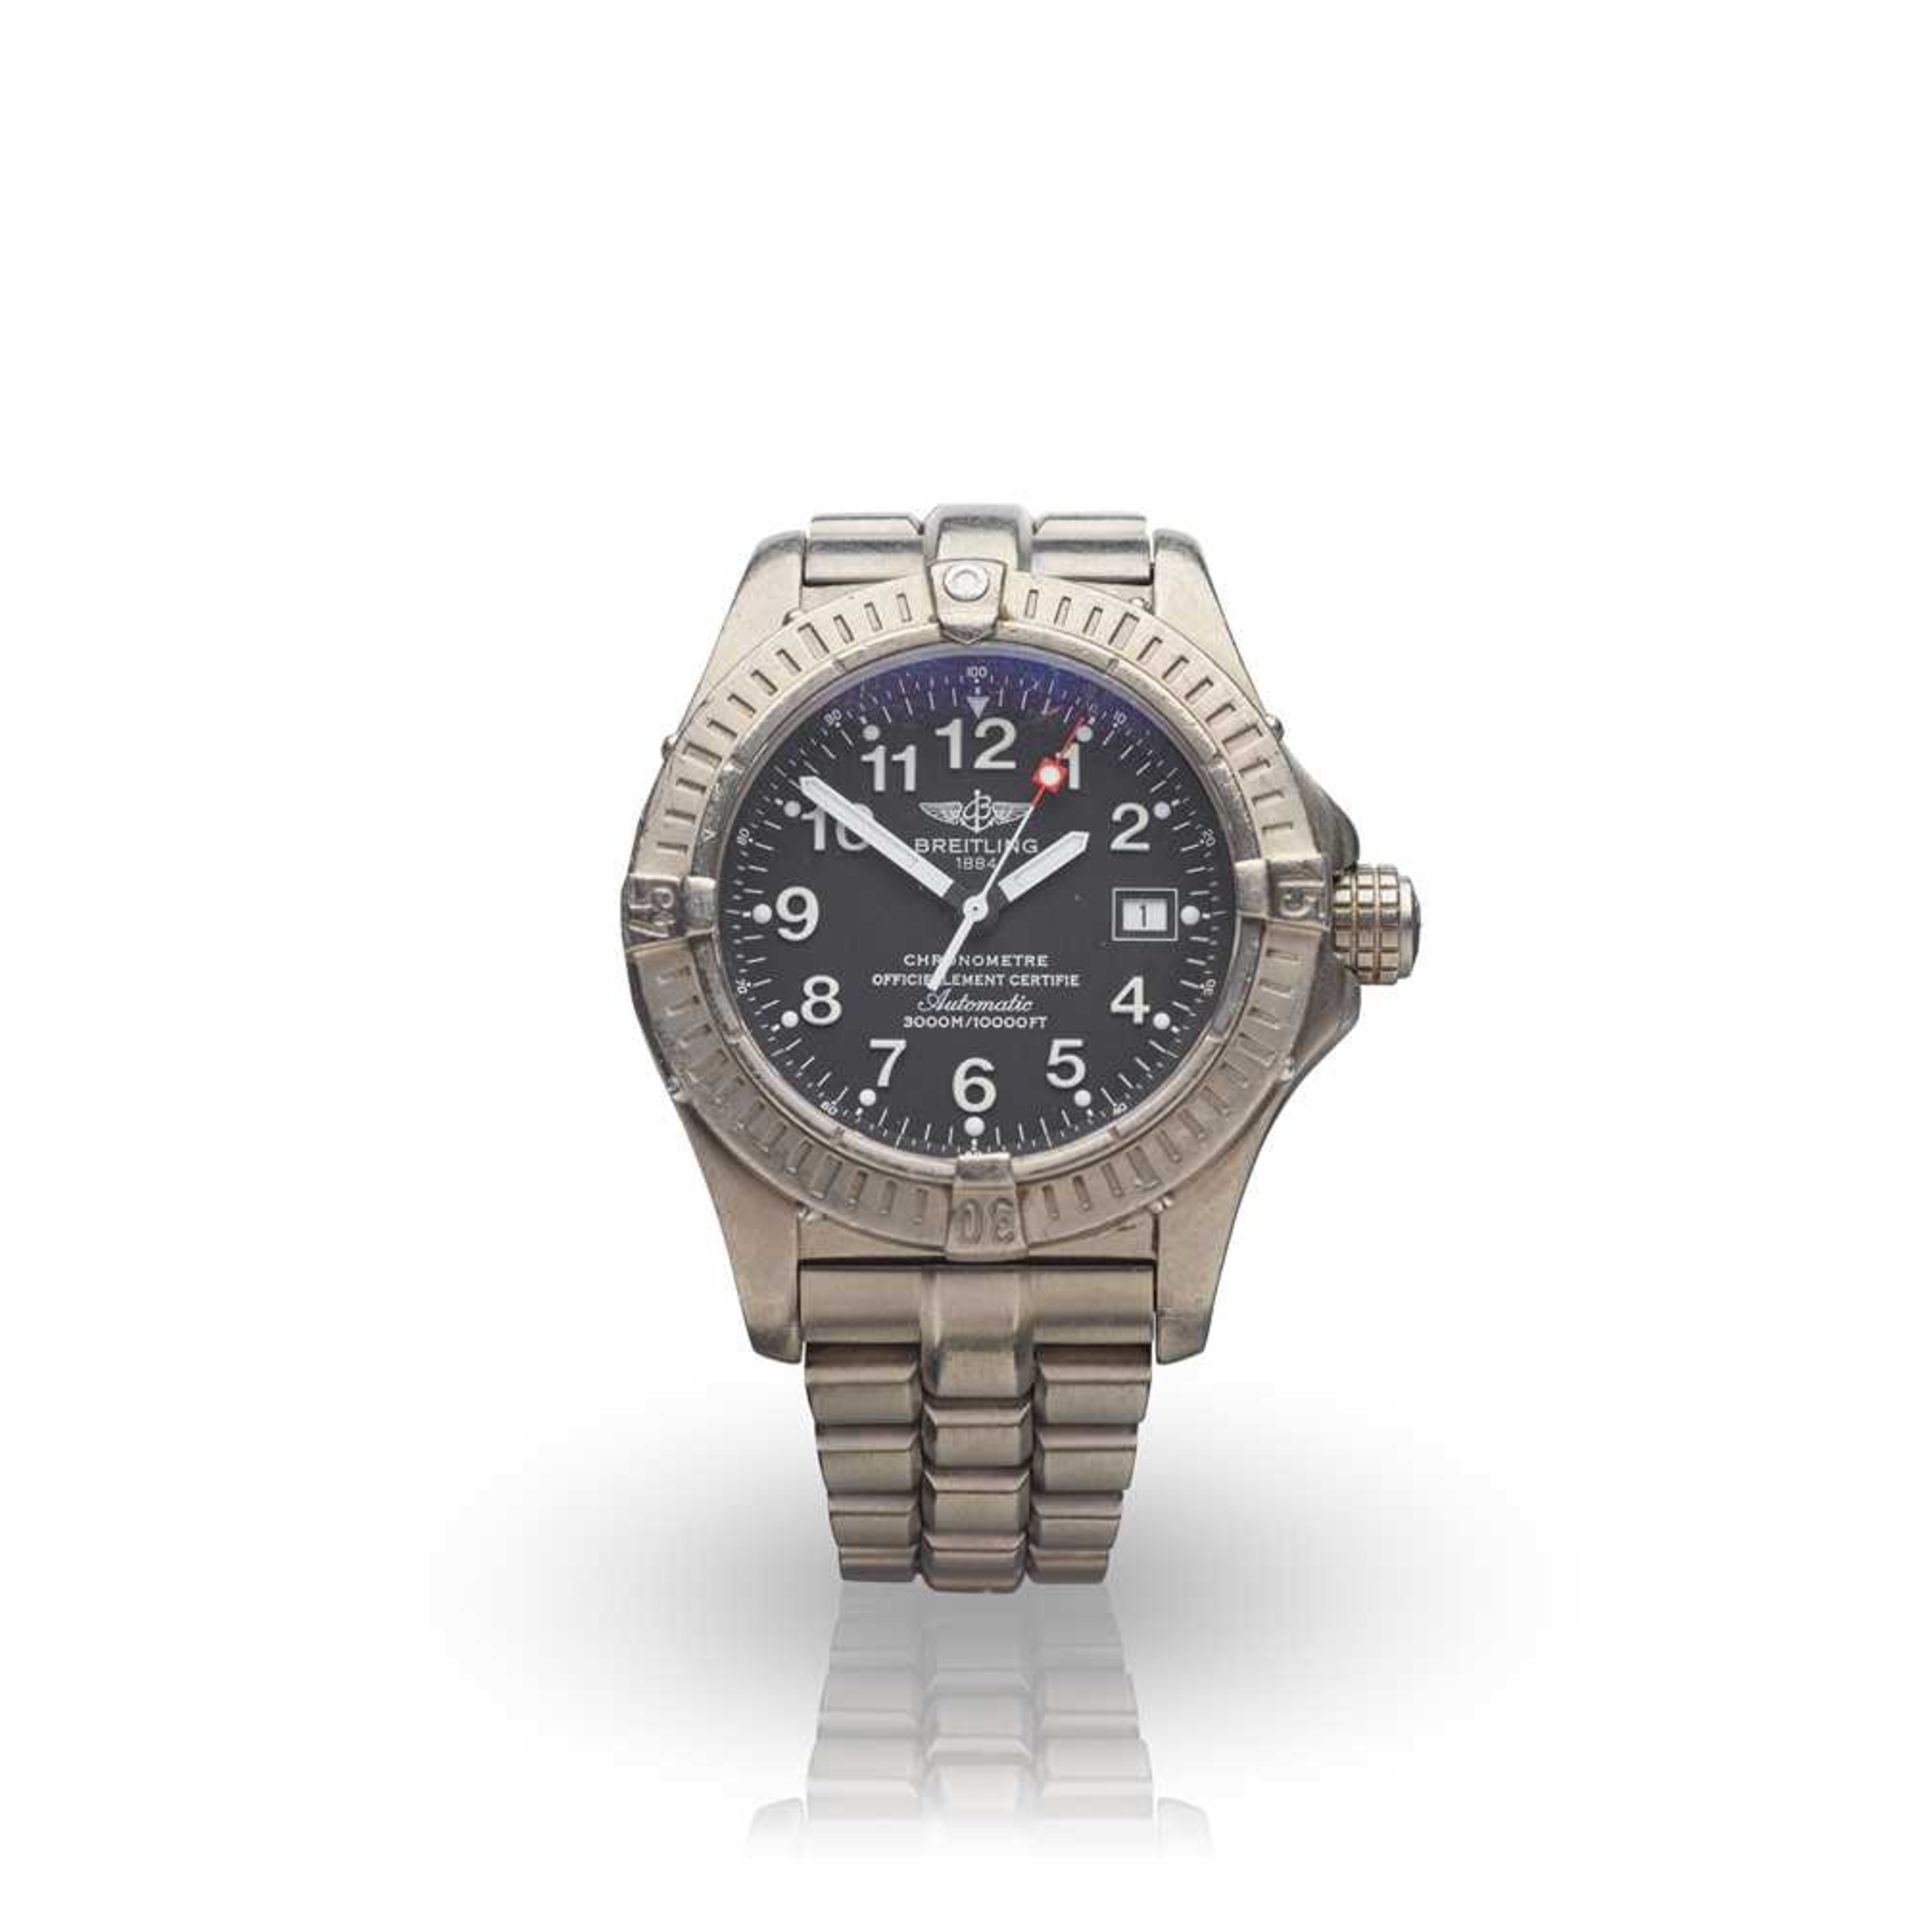 Breitling: a titanium watch